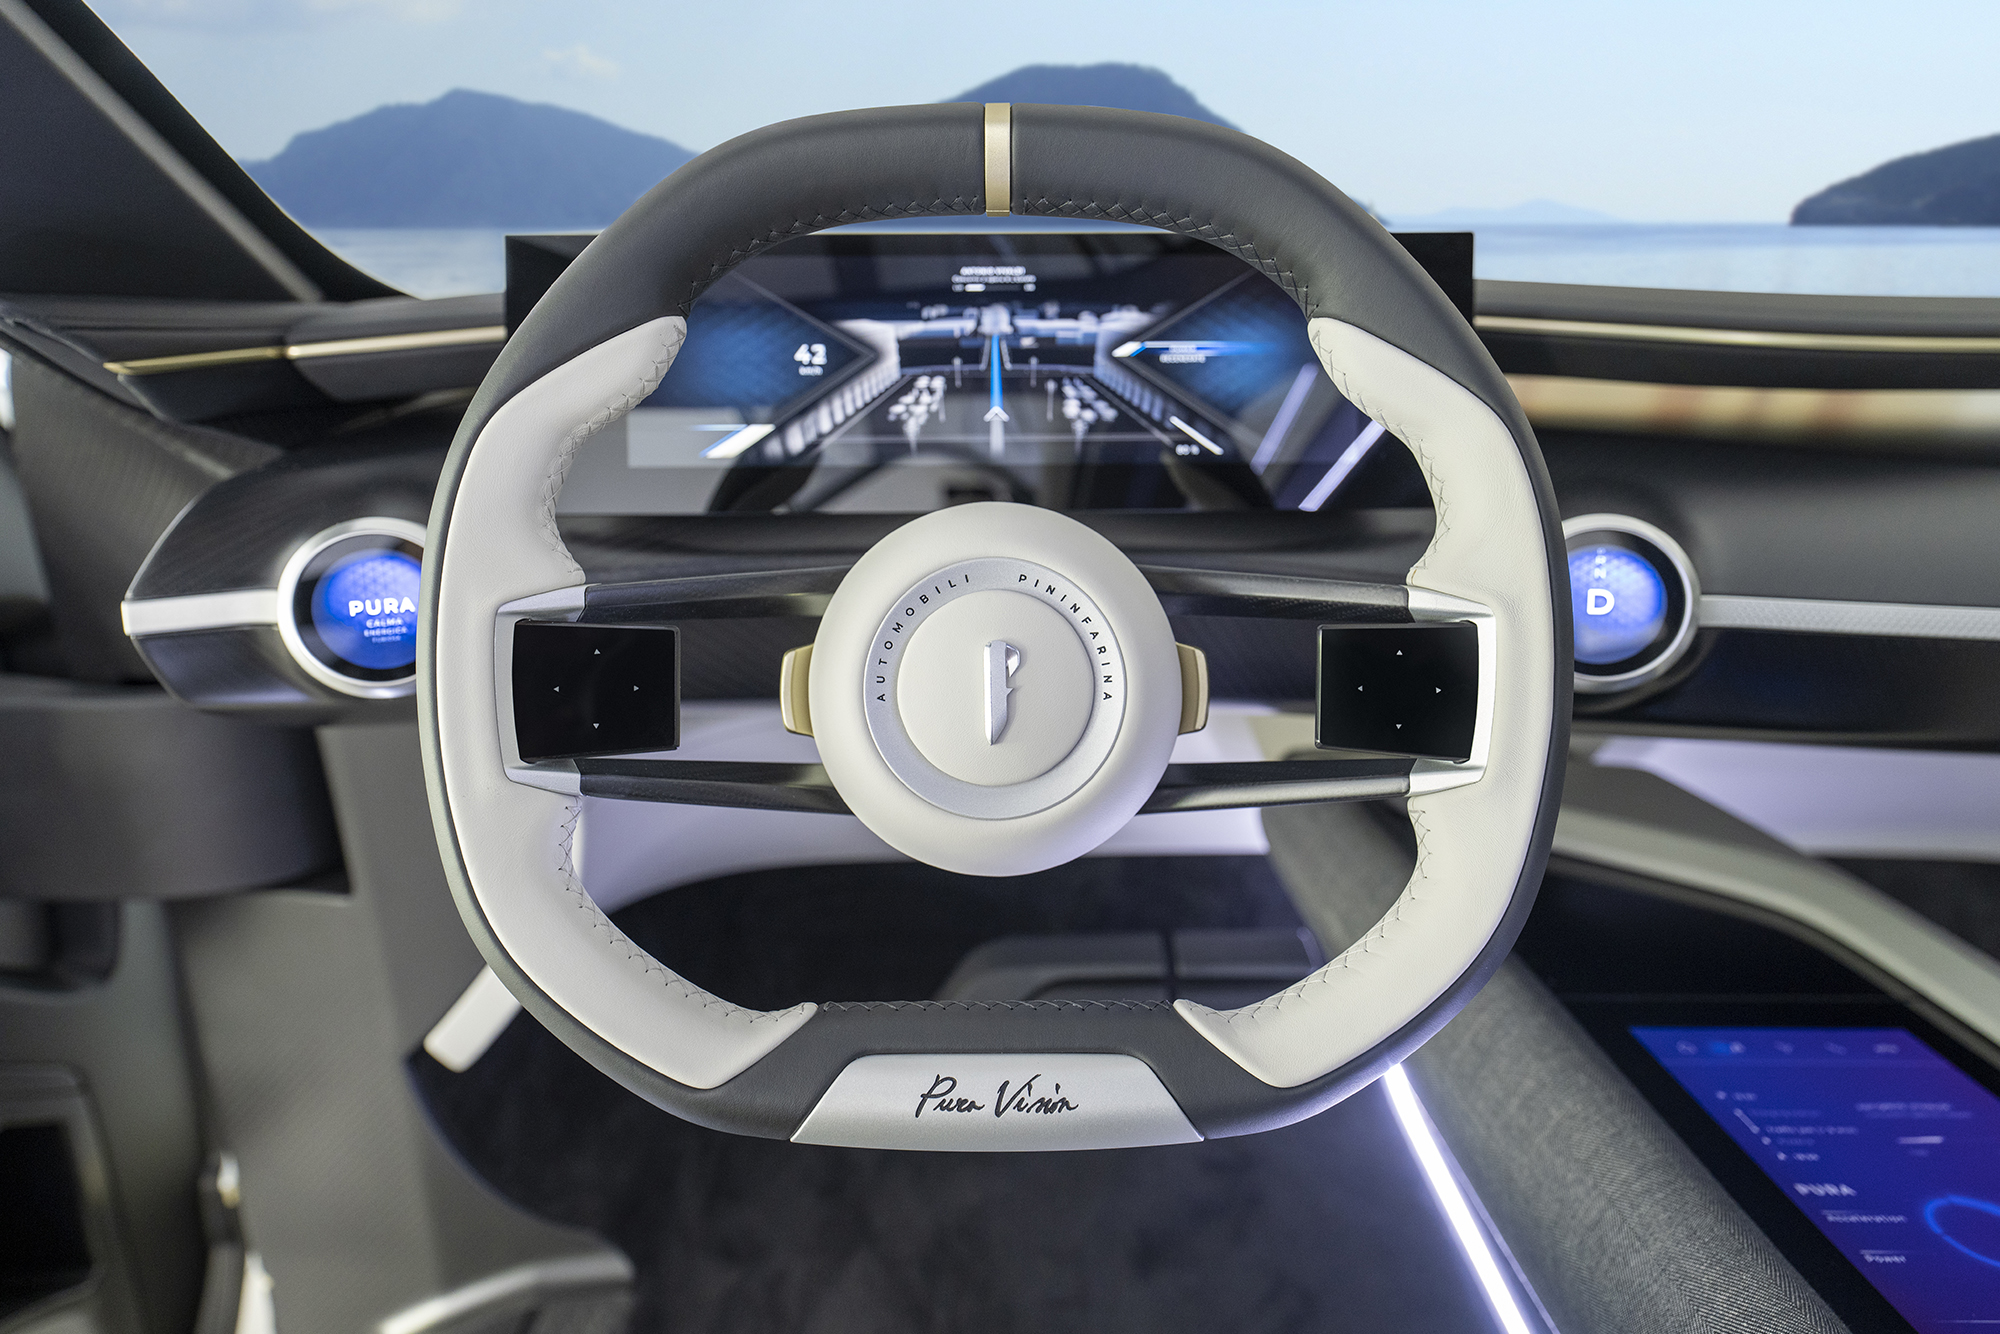 Automobili Pininfarina Pura Vision EV Concept steering wheel